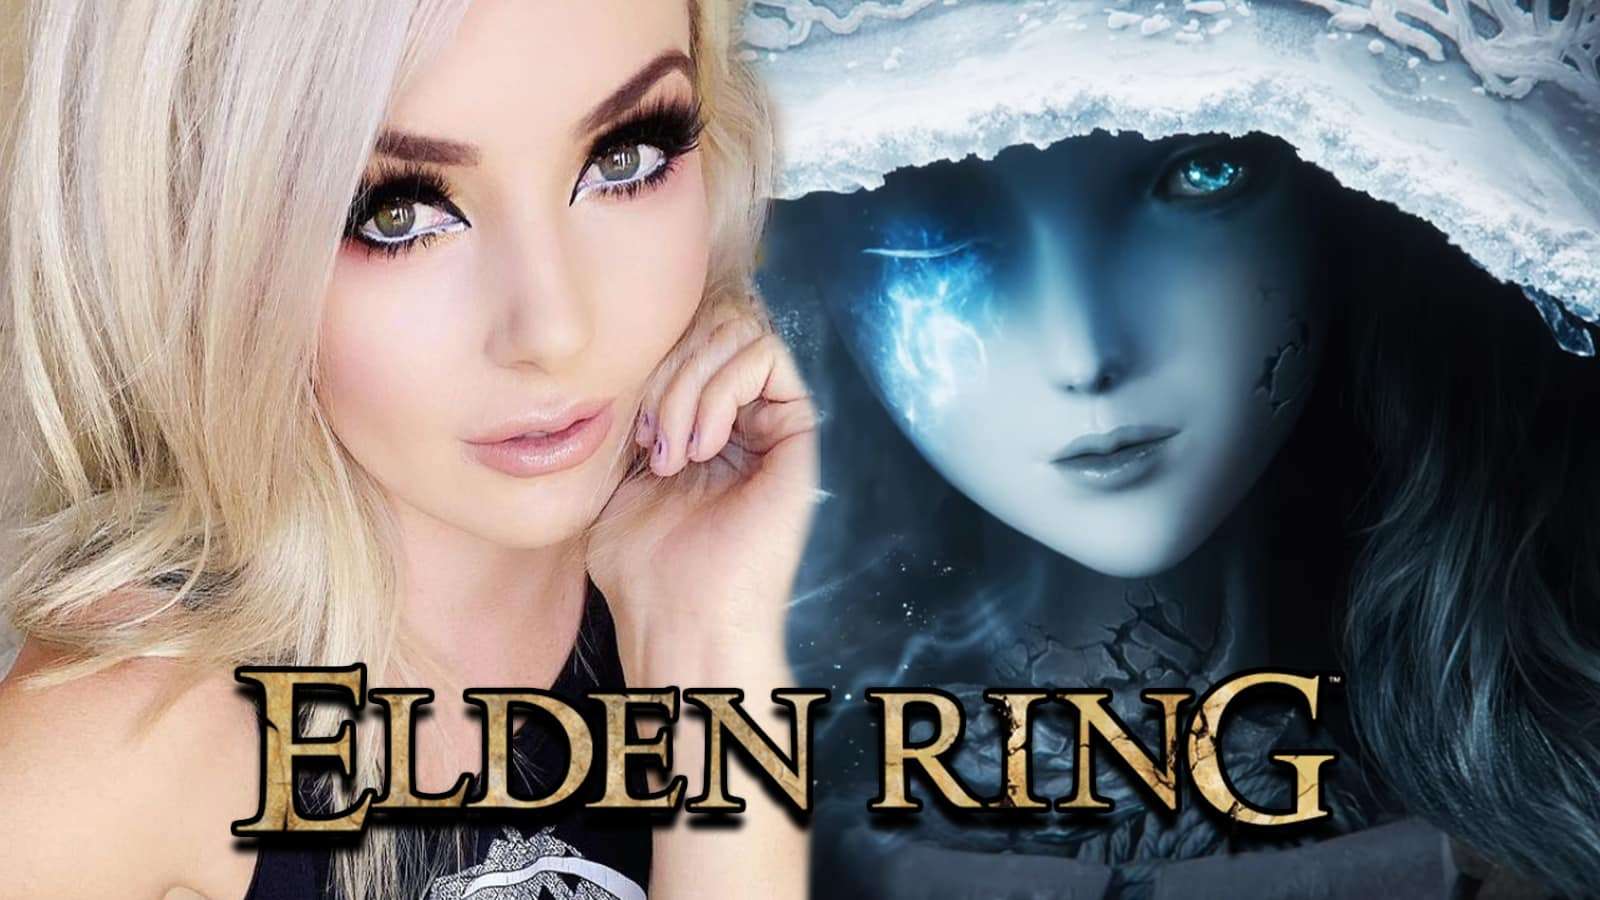 Cosplayer Jessica Nigri next to Ranni the Witch Elden Ring screenshot.